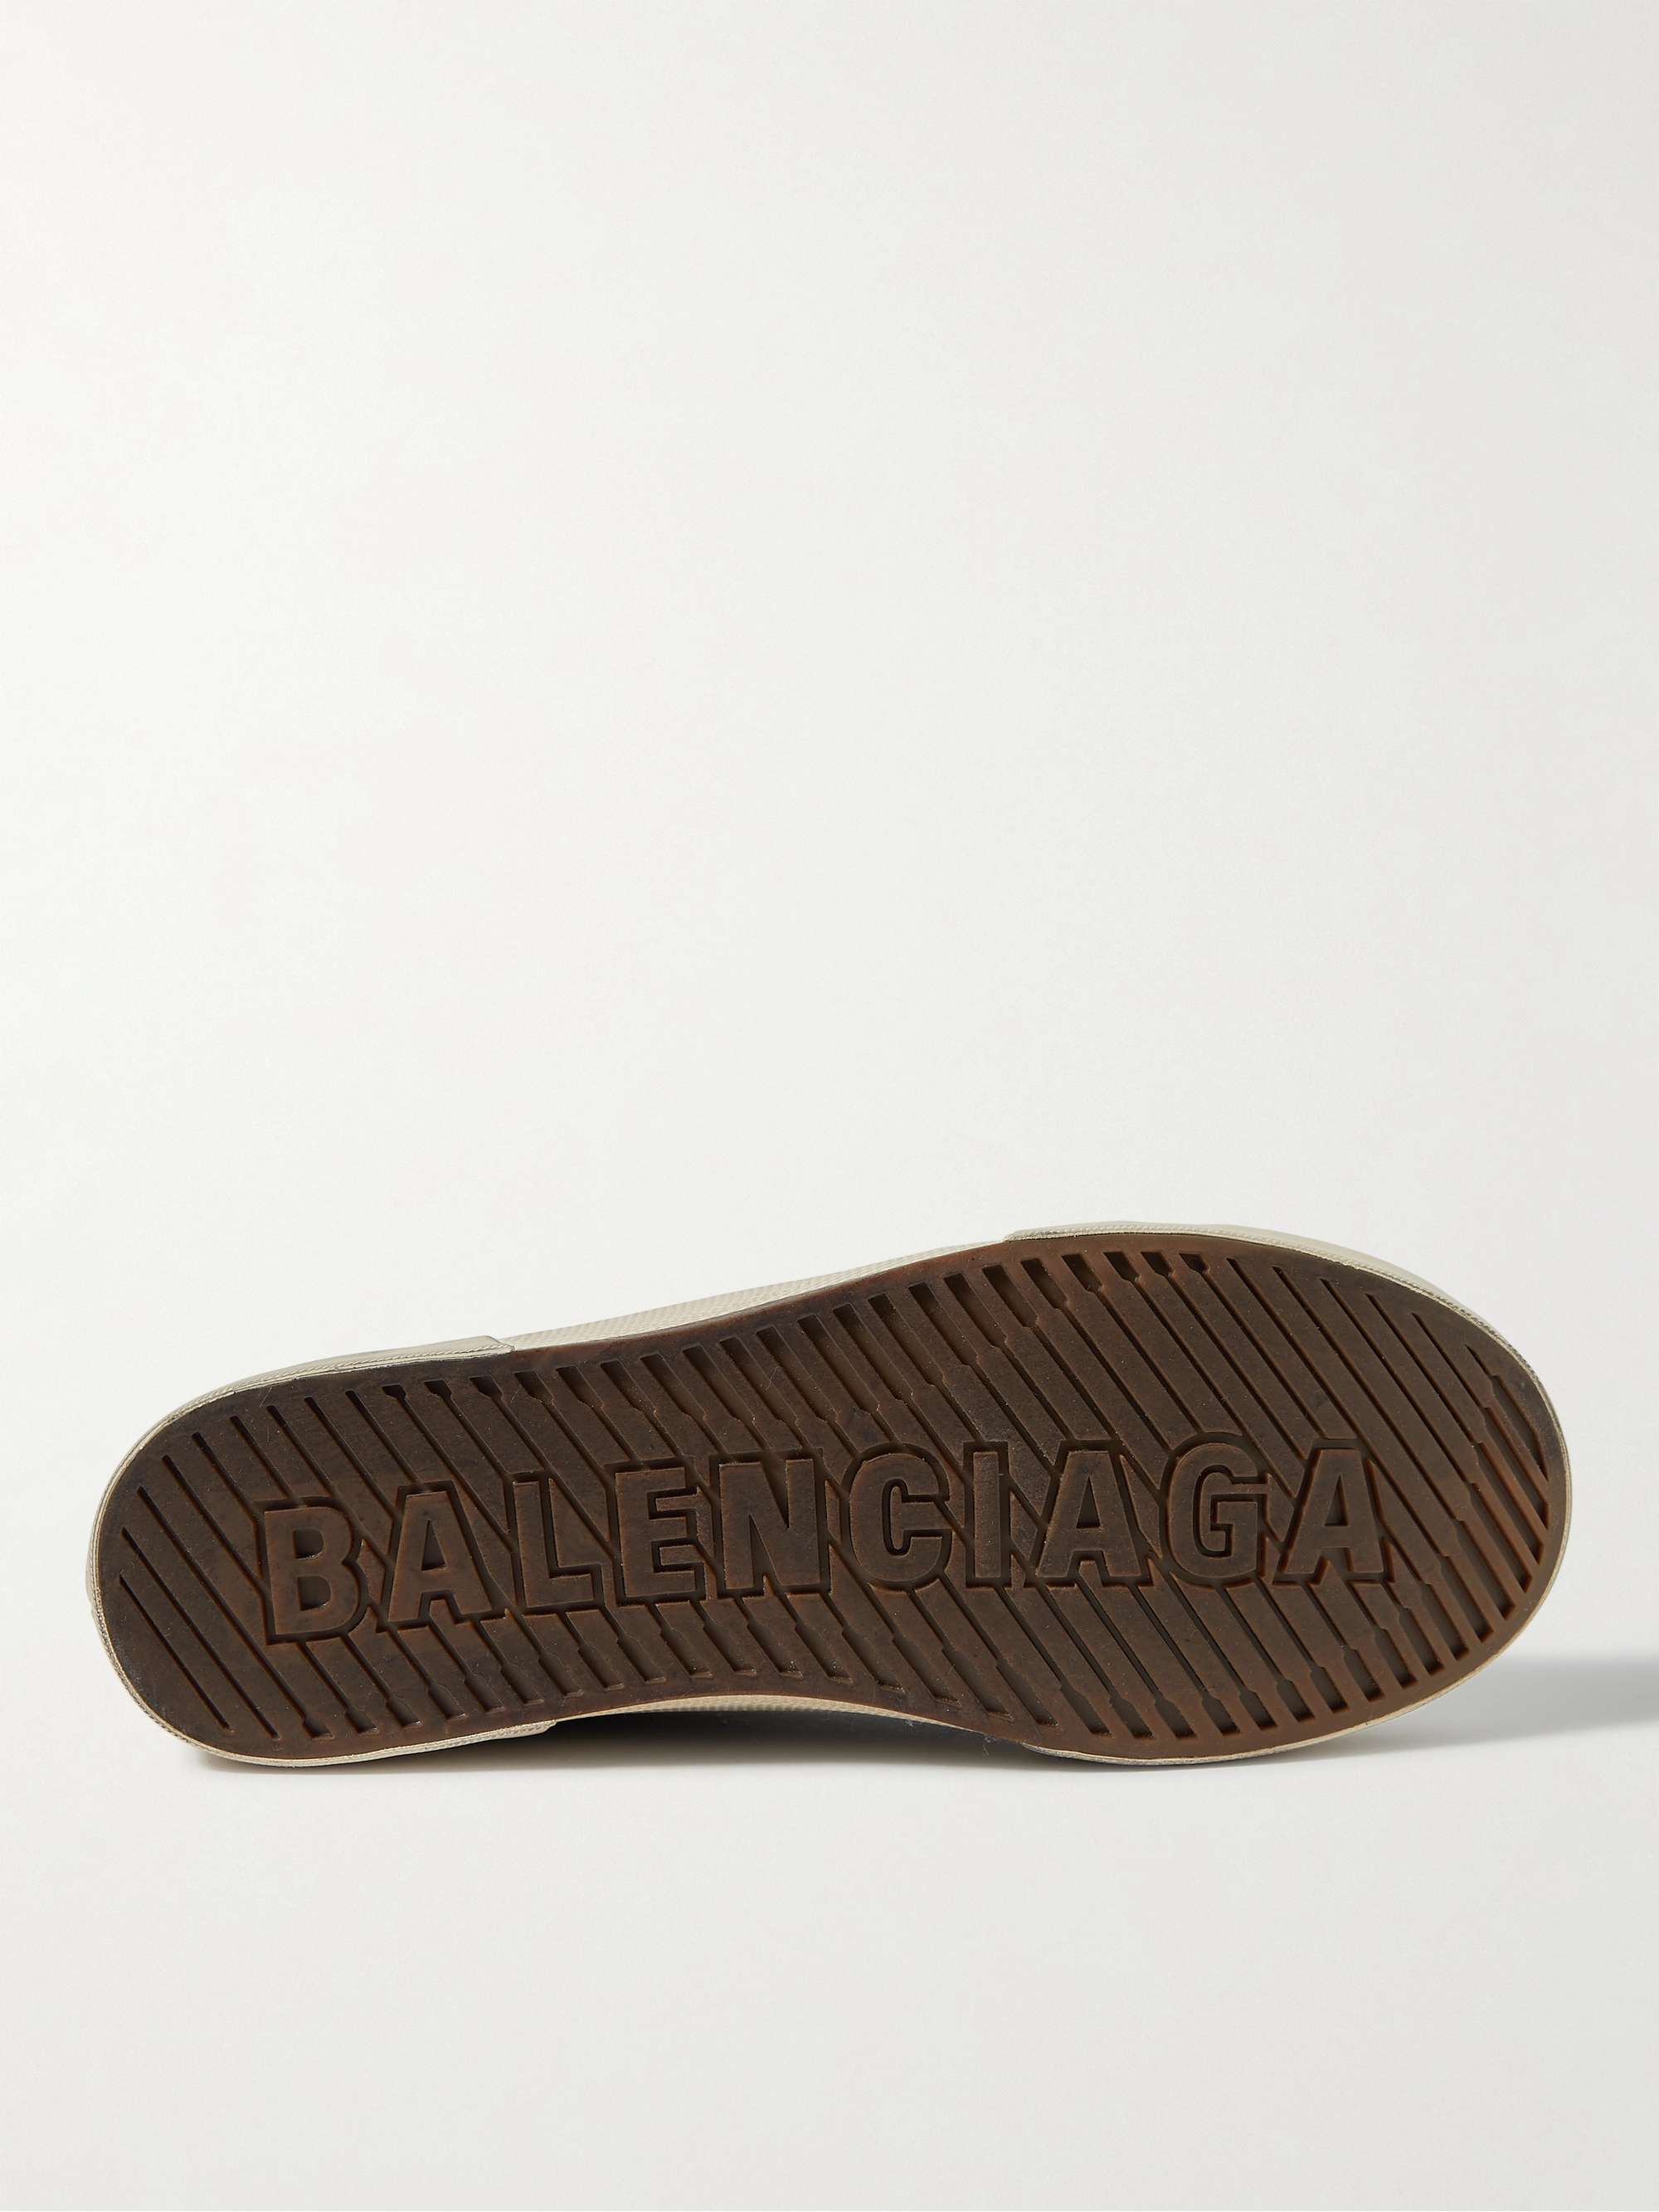 Balenciaga Paris Men's Dark Mink High Top Sneakers New